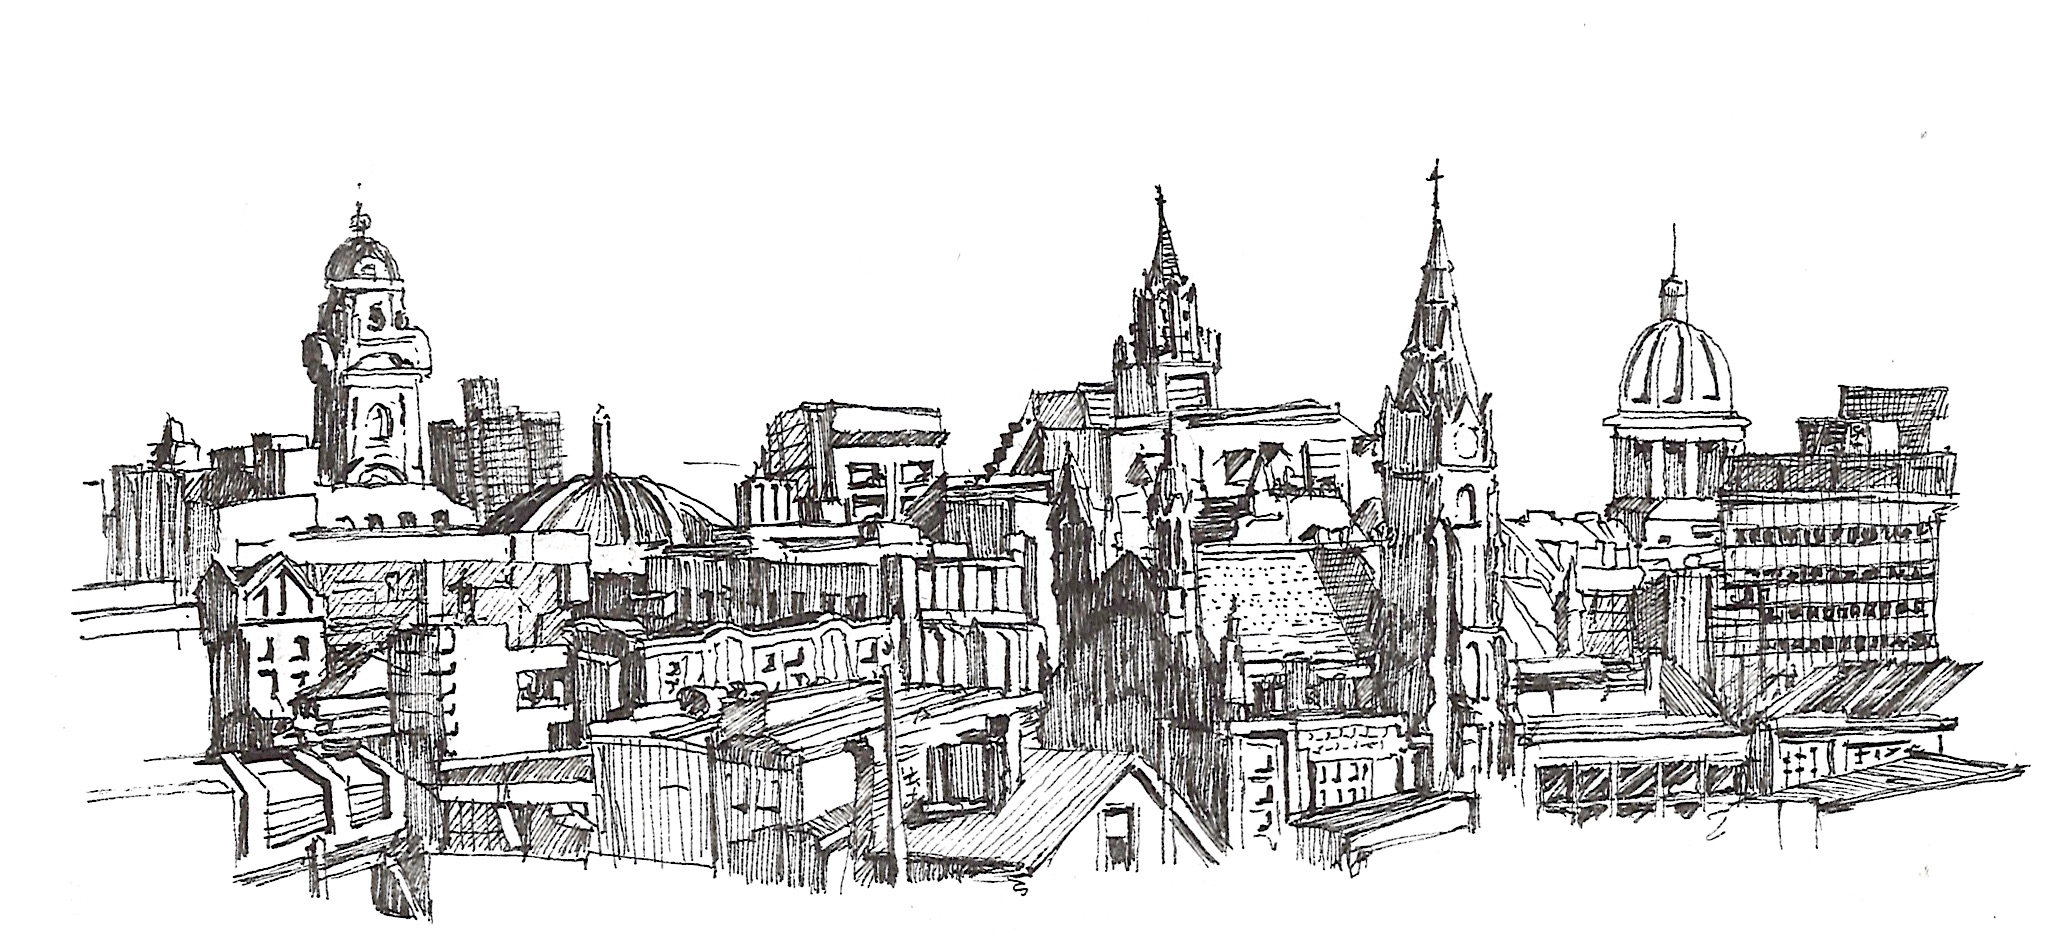 My Favourite Urban Sketching Classes // #domestika - YouTube